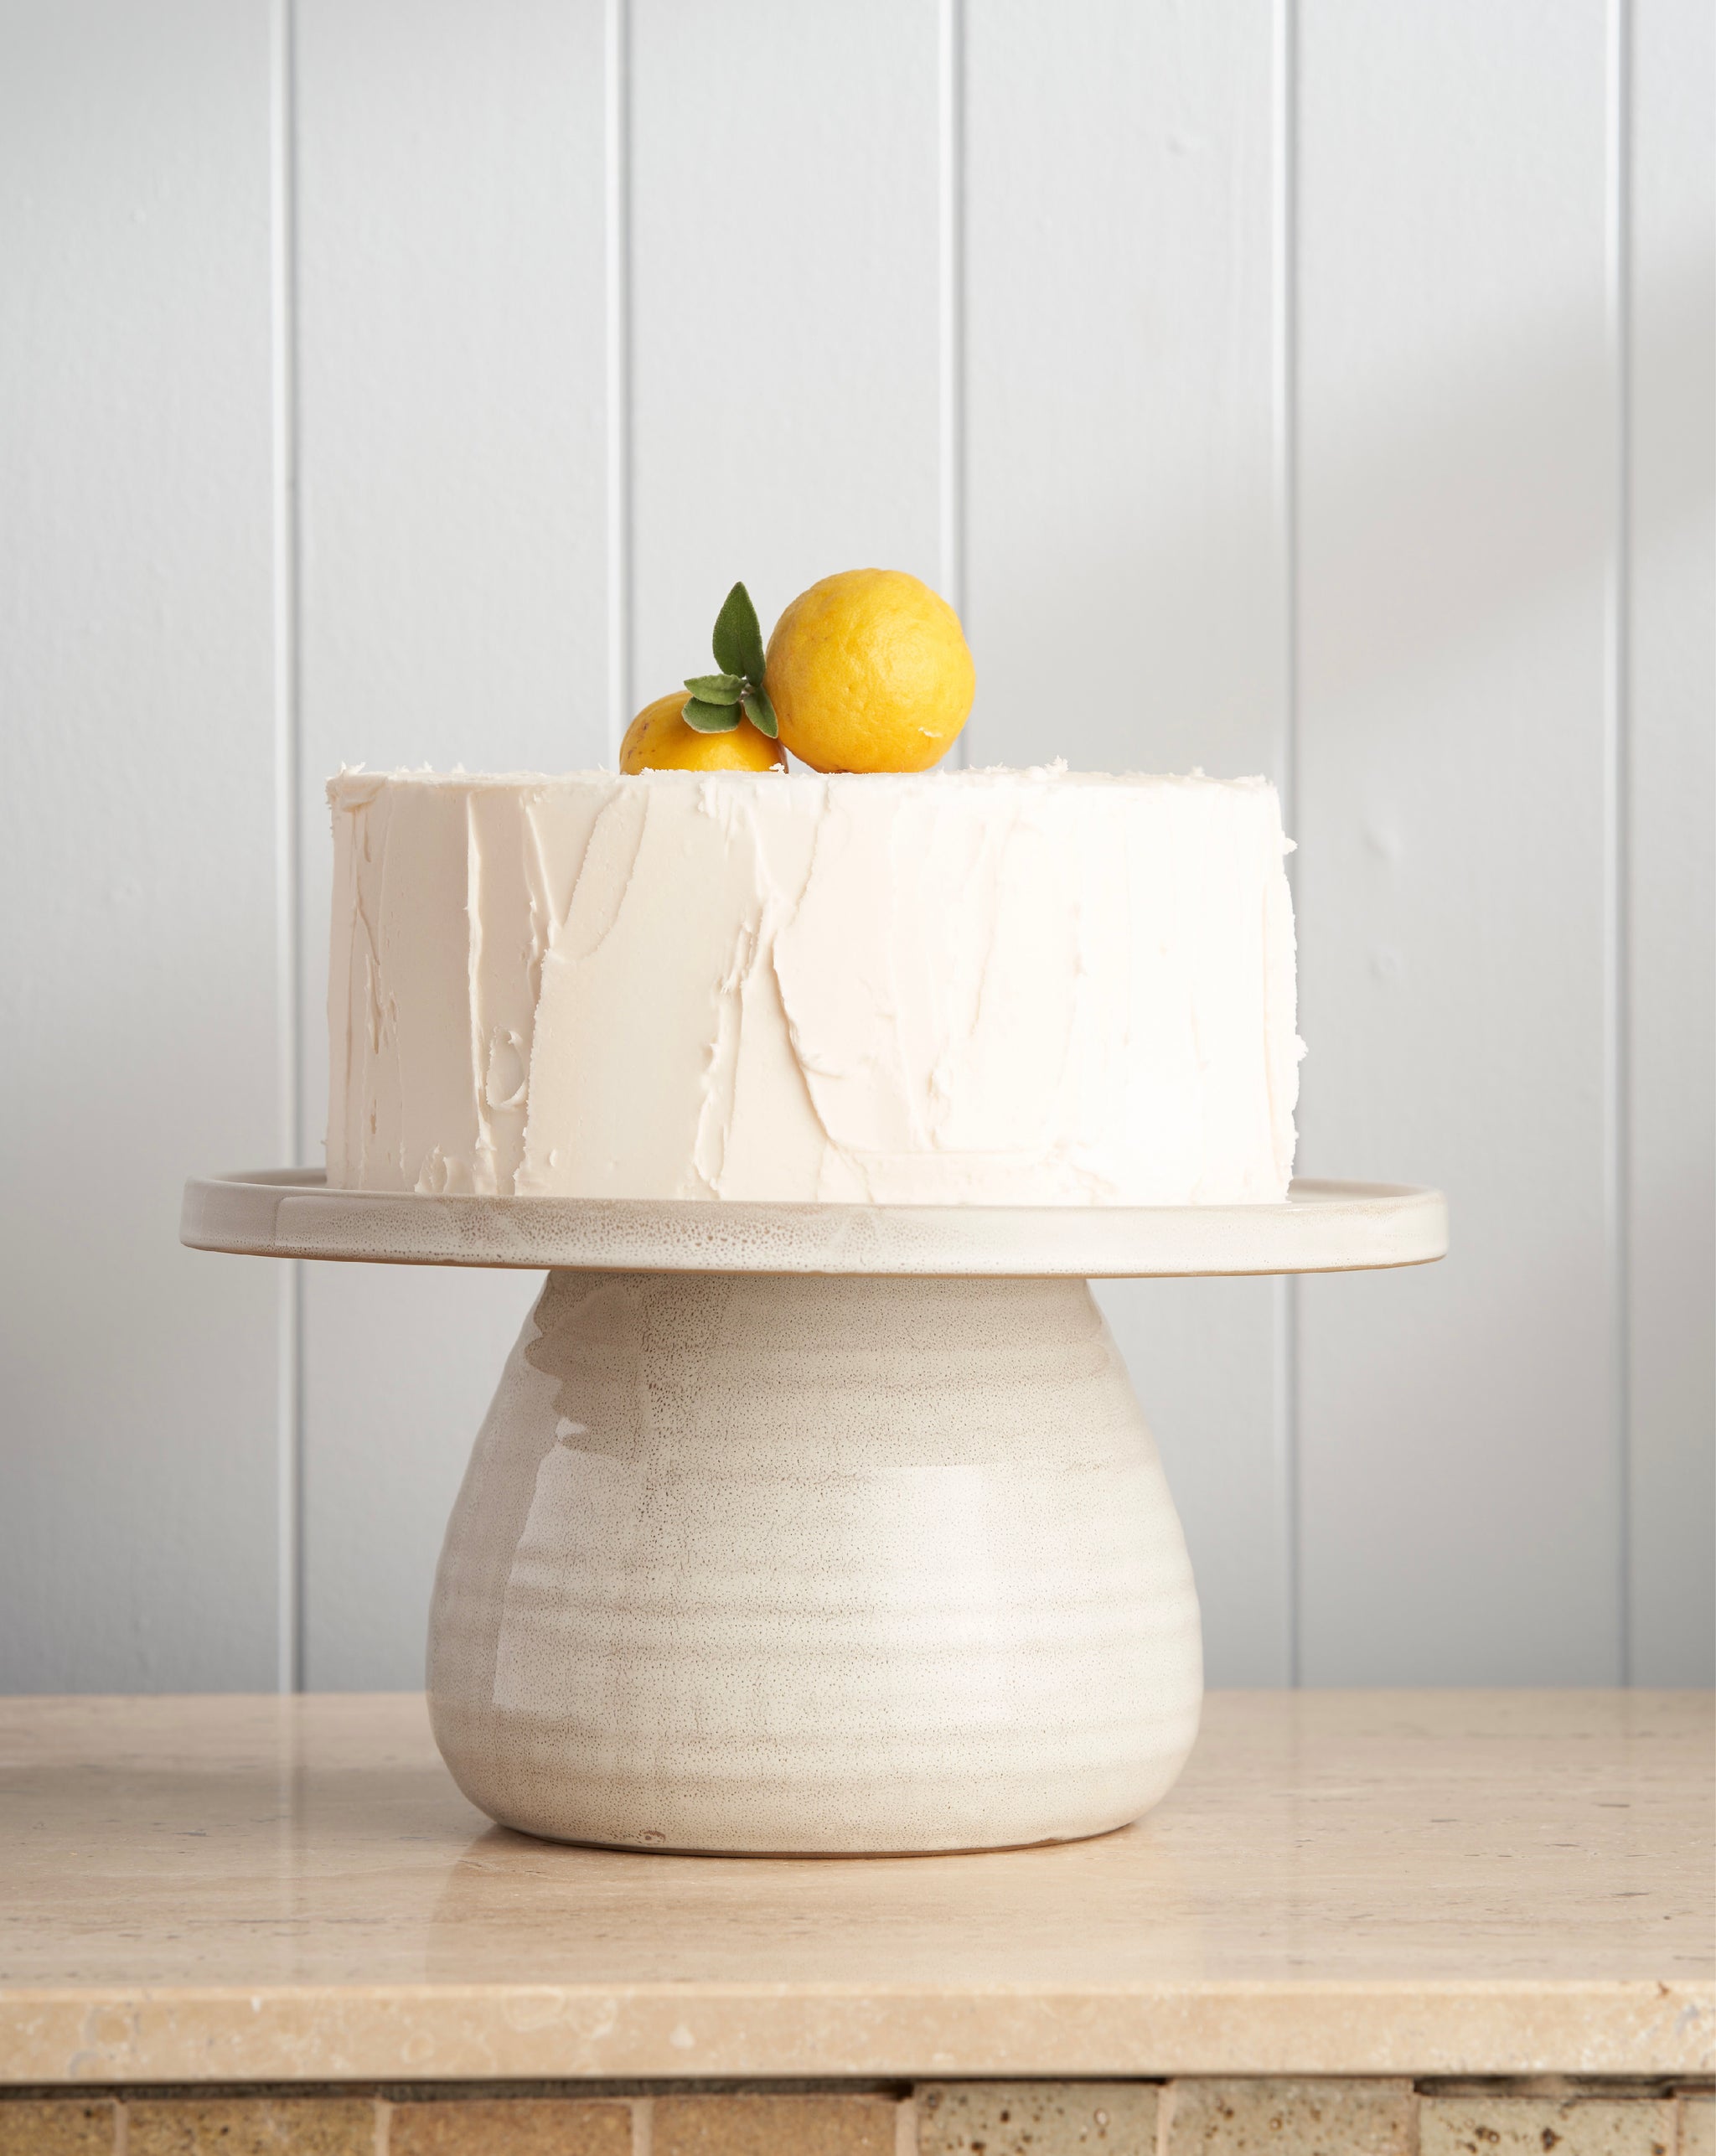 Robert Gordon Heirloom Collection Cake Stand – Kitchen & Dining from BJs Furniture Horsham